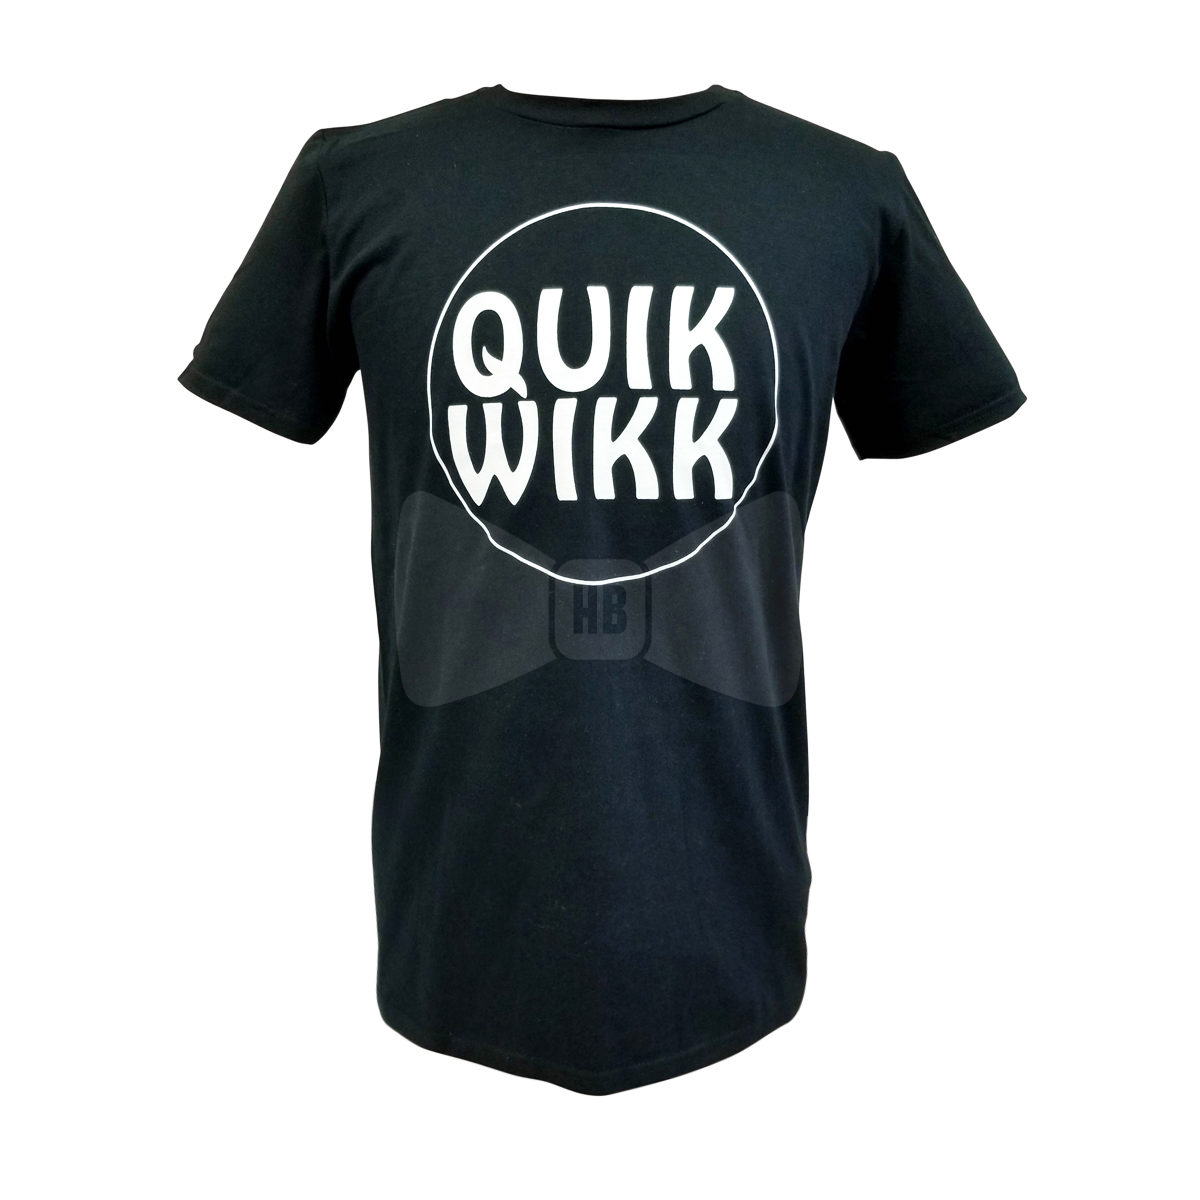 Quik Wikk T-Shirt Large Black